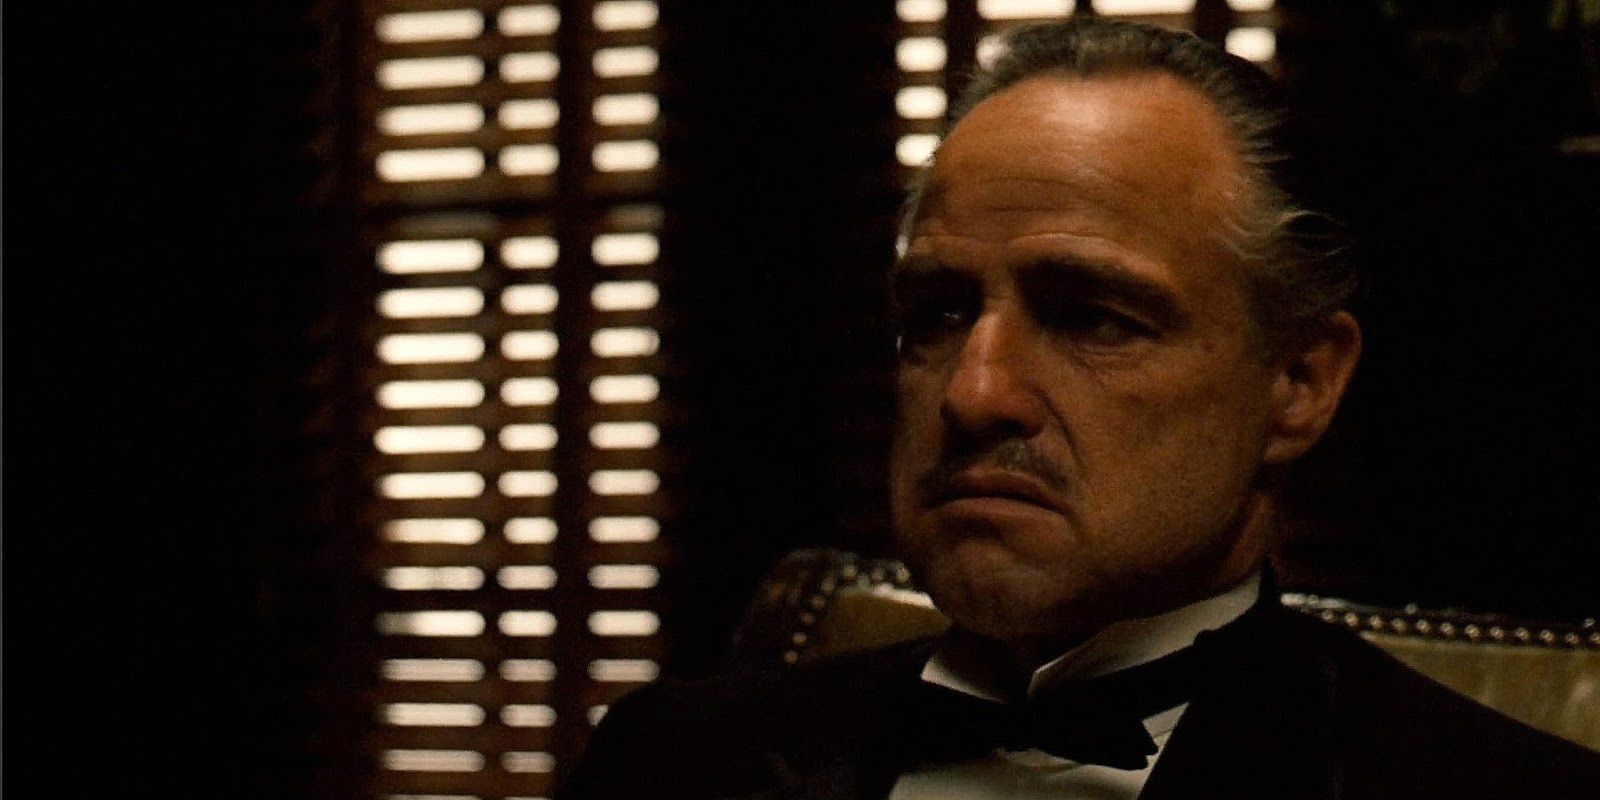 Marlon Brando in the opening scene of The Godfather